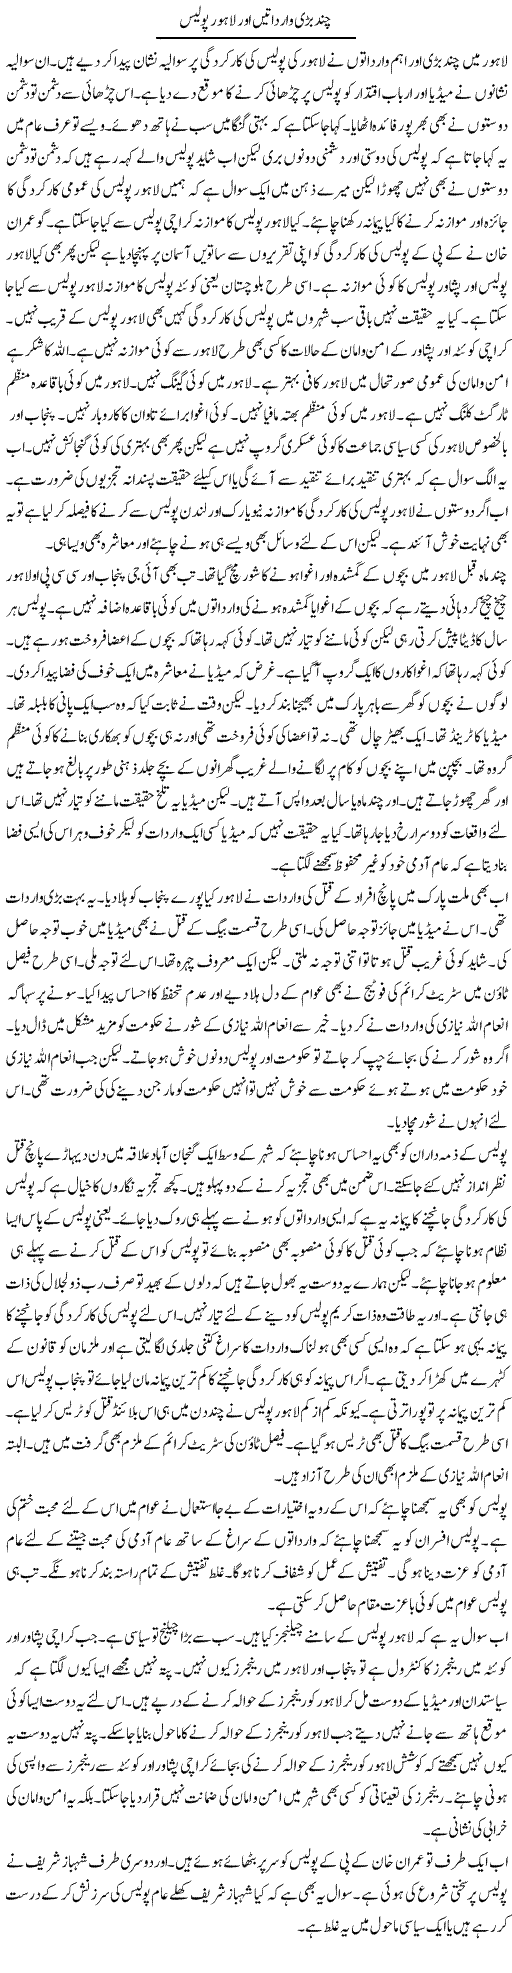 Chand Bari Waardaatain Aur Lahore Police | Muzamal Suharwardy | Daily Urdu Columns